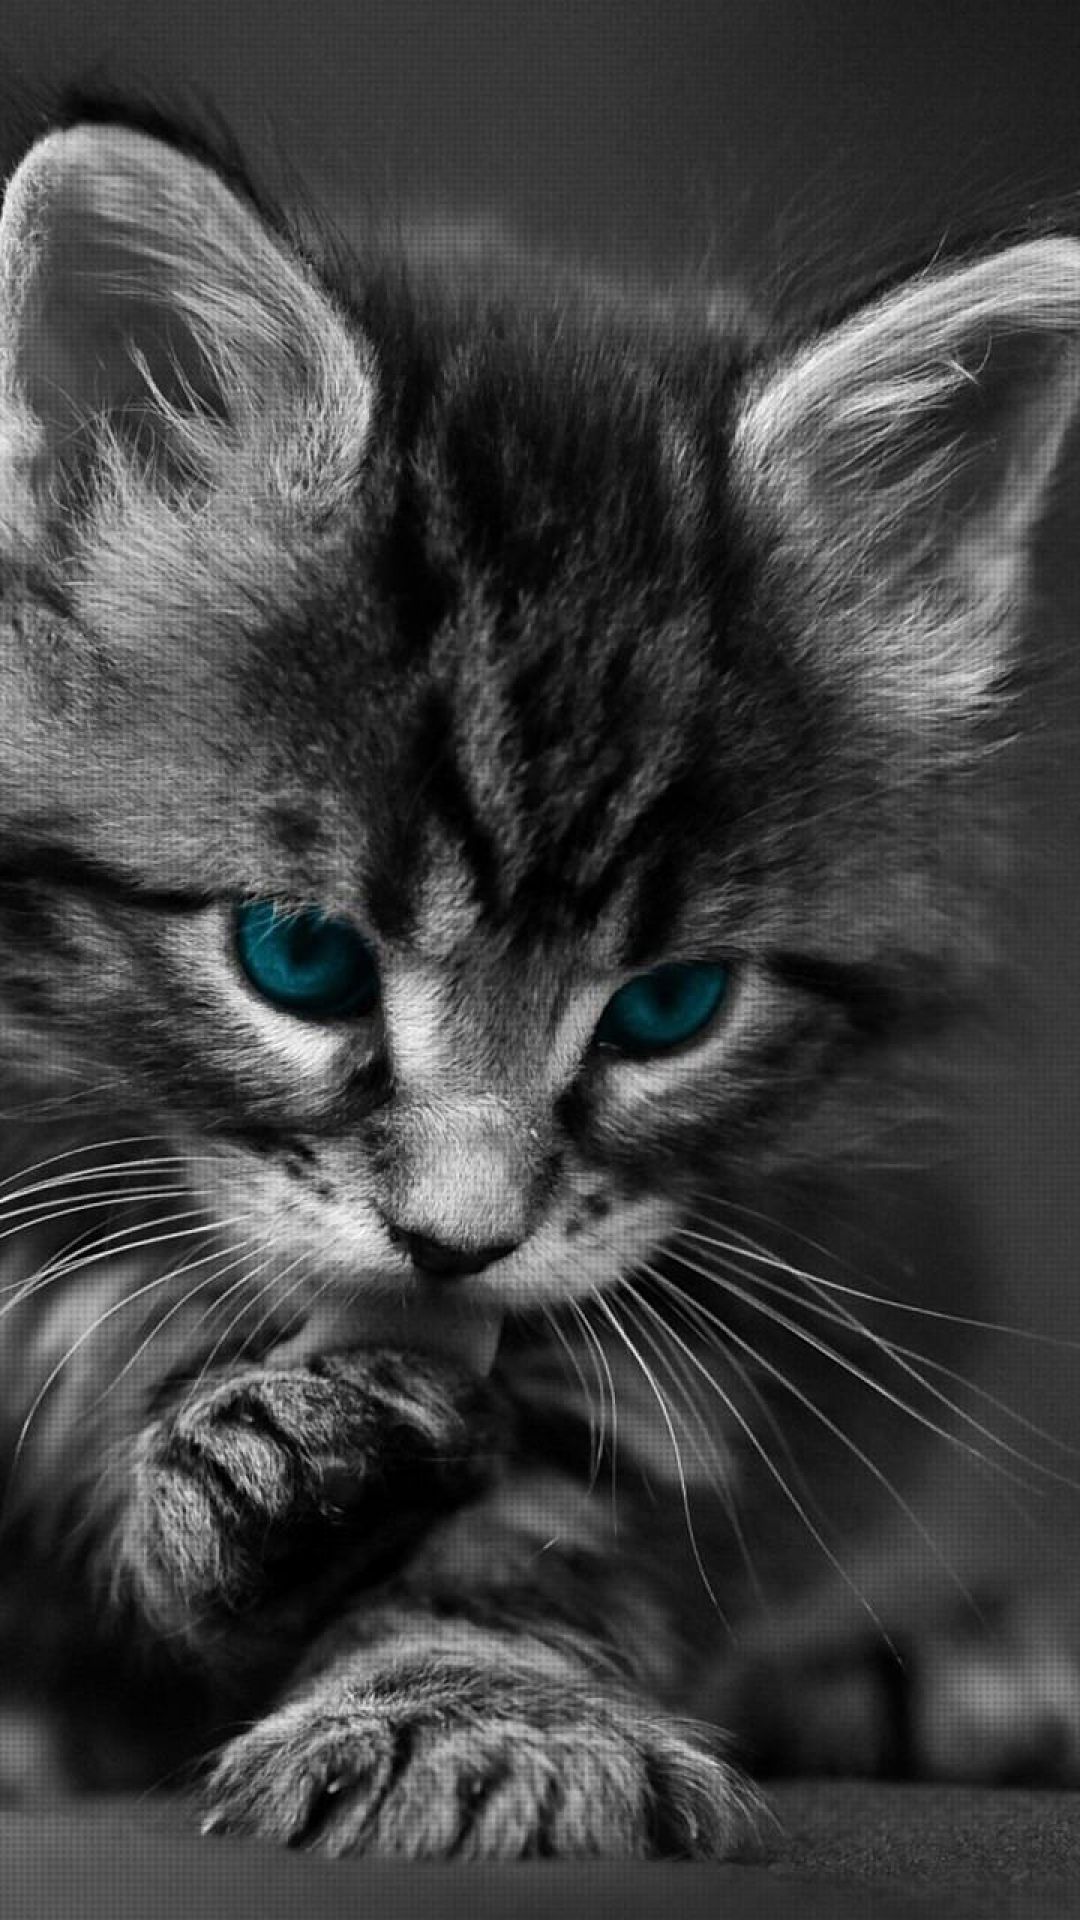 999 Dark Cat Pictures  Download Free Images on Unsplash